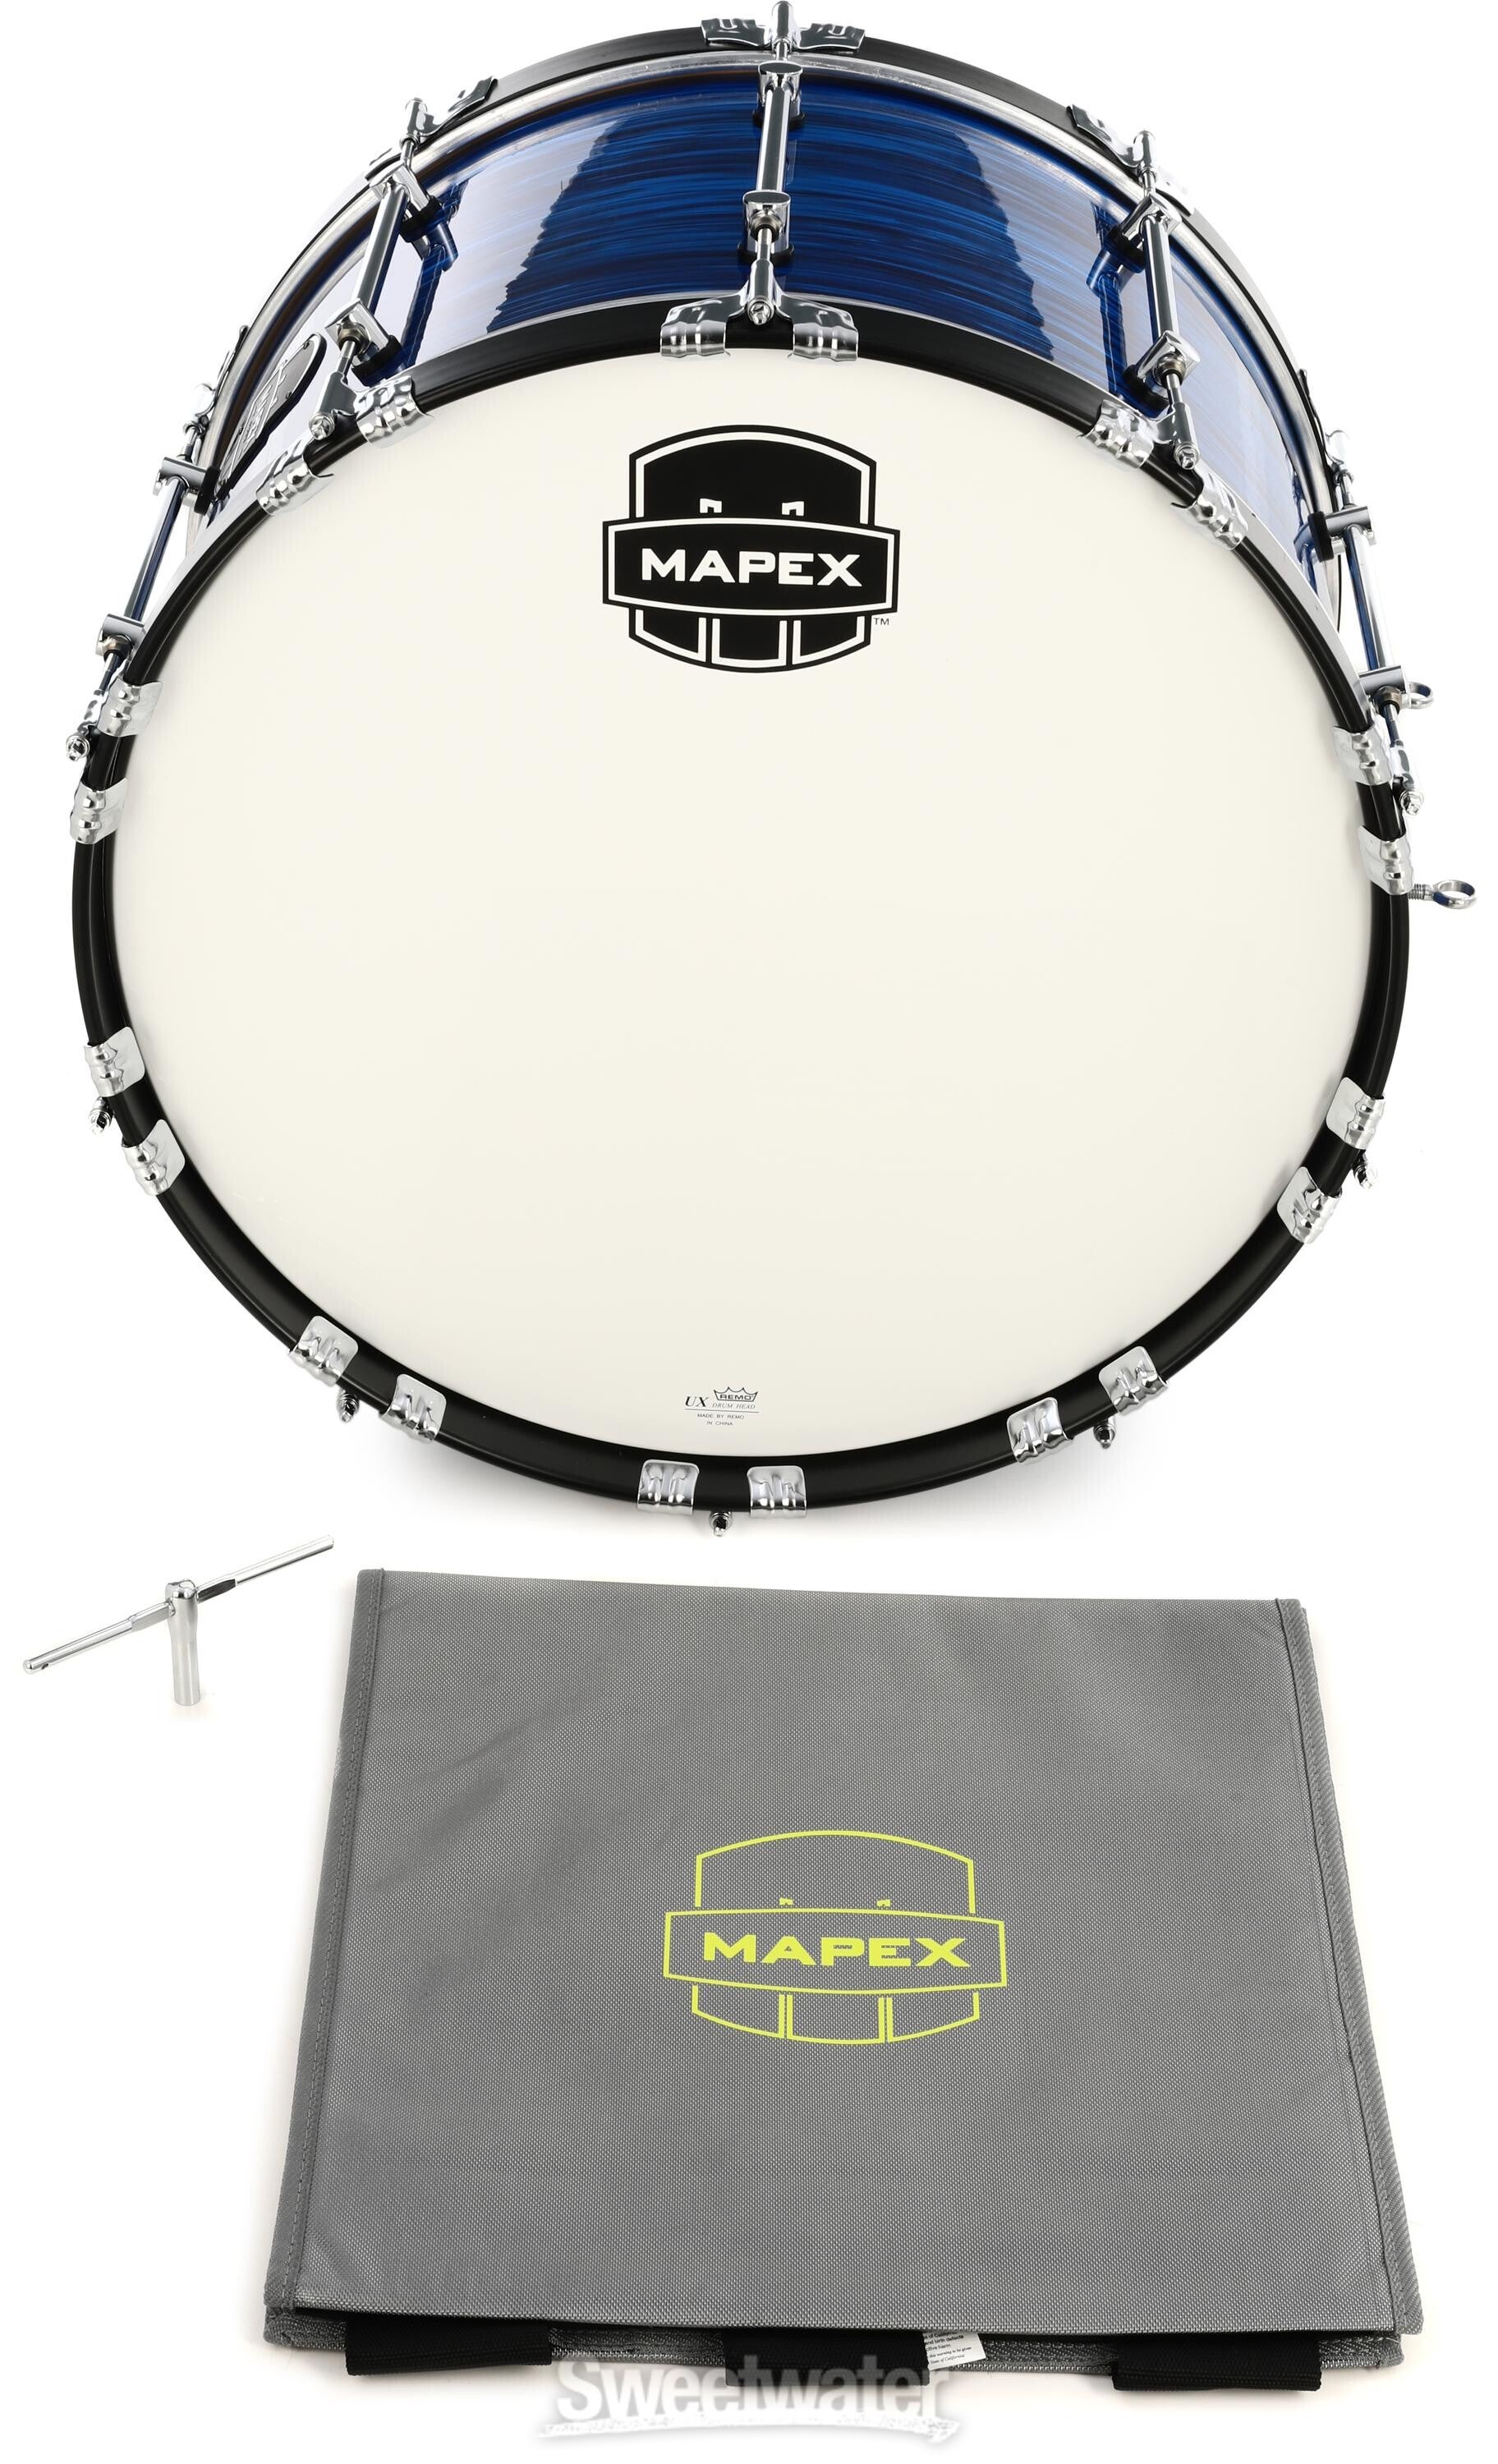 Mapex Quantum Mark II Marching Bass Drum - 14 x 22 inch - Blue Ripple